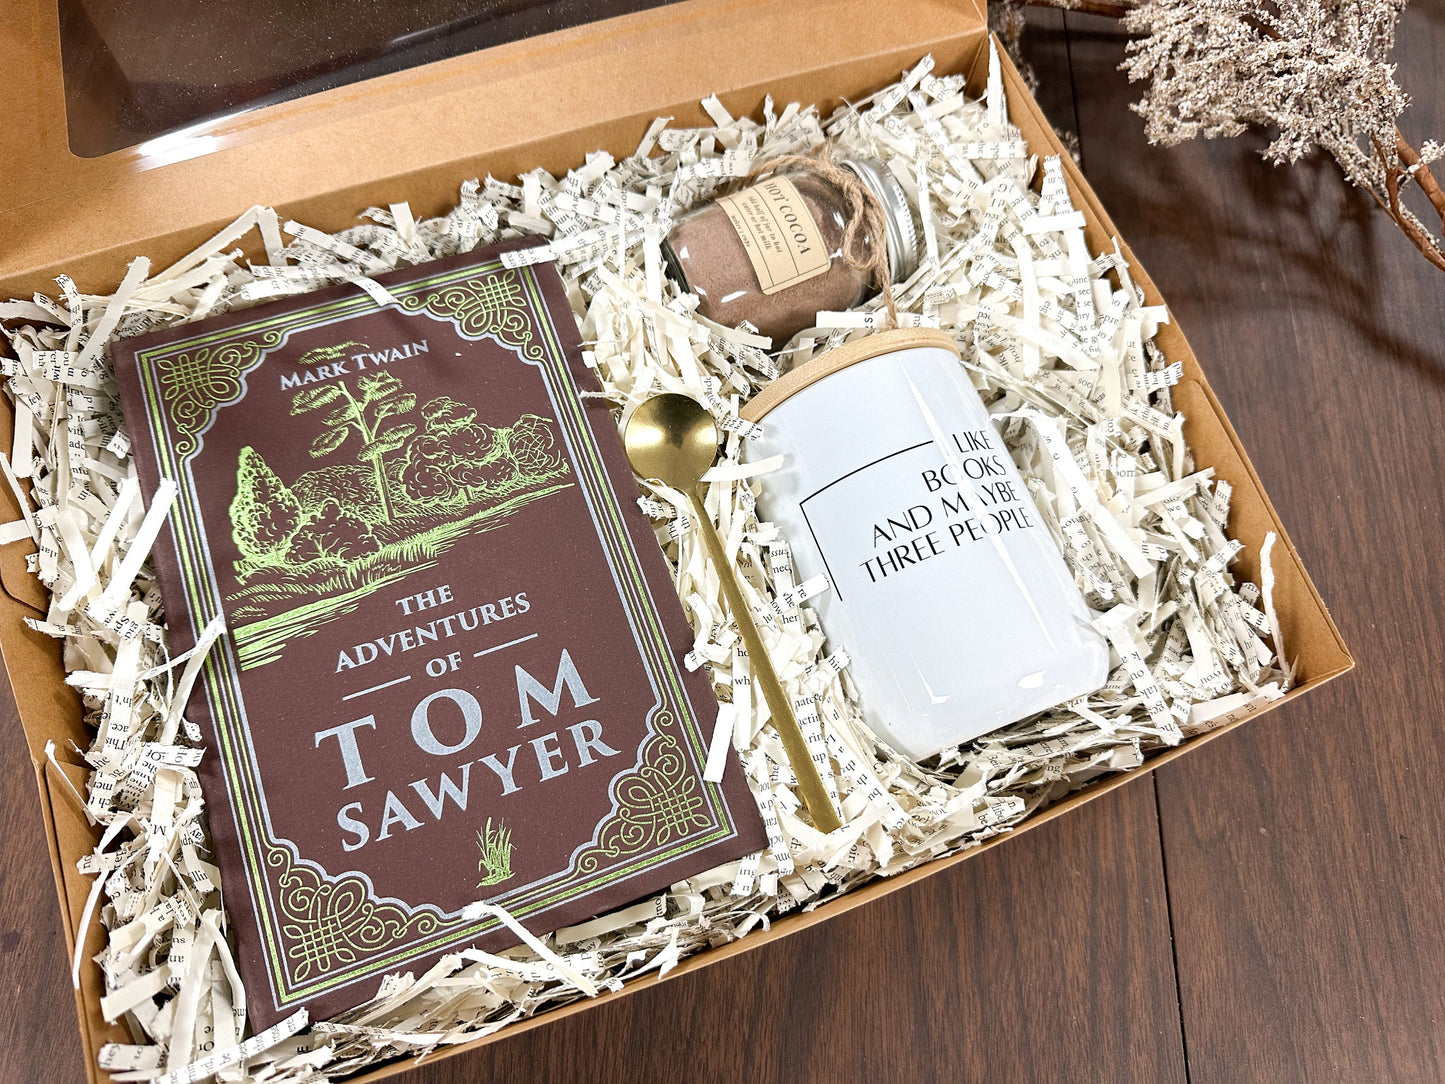 Classic Book, Christmas Gift Idea, Book Gift Idea, Book Lover Gift Box, Tom Sawyer